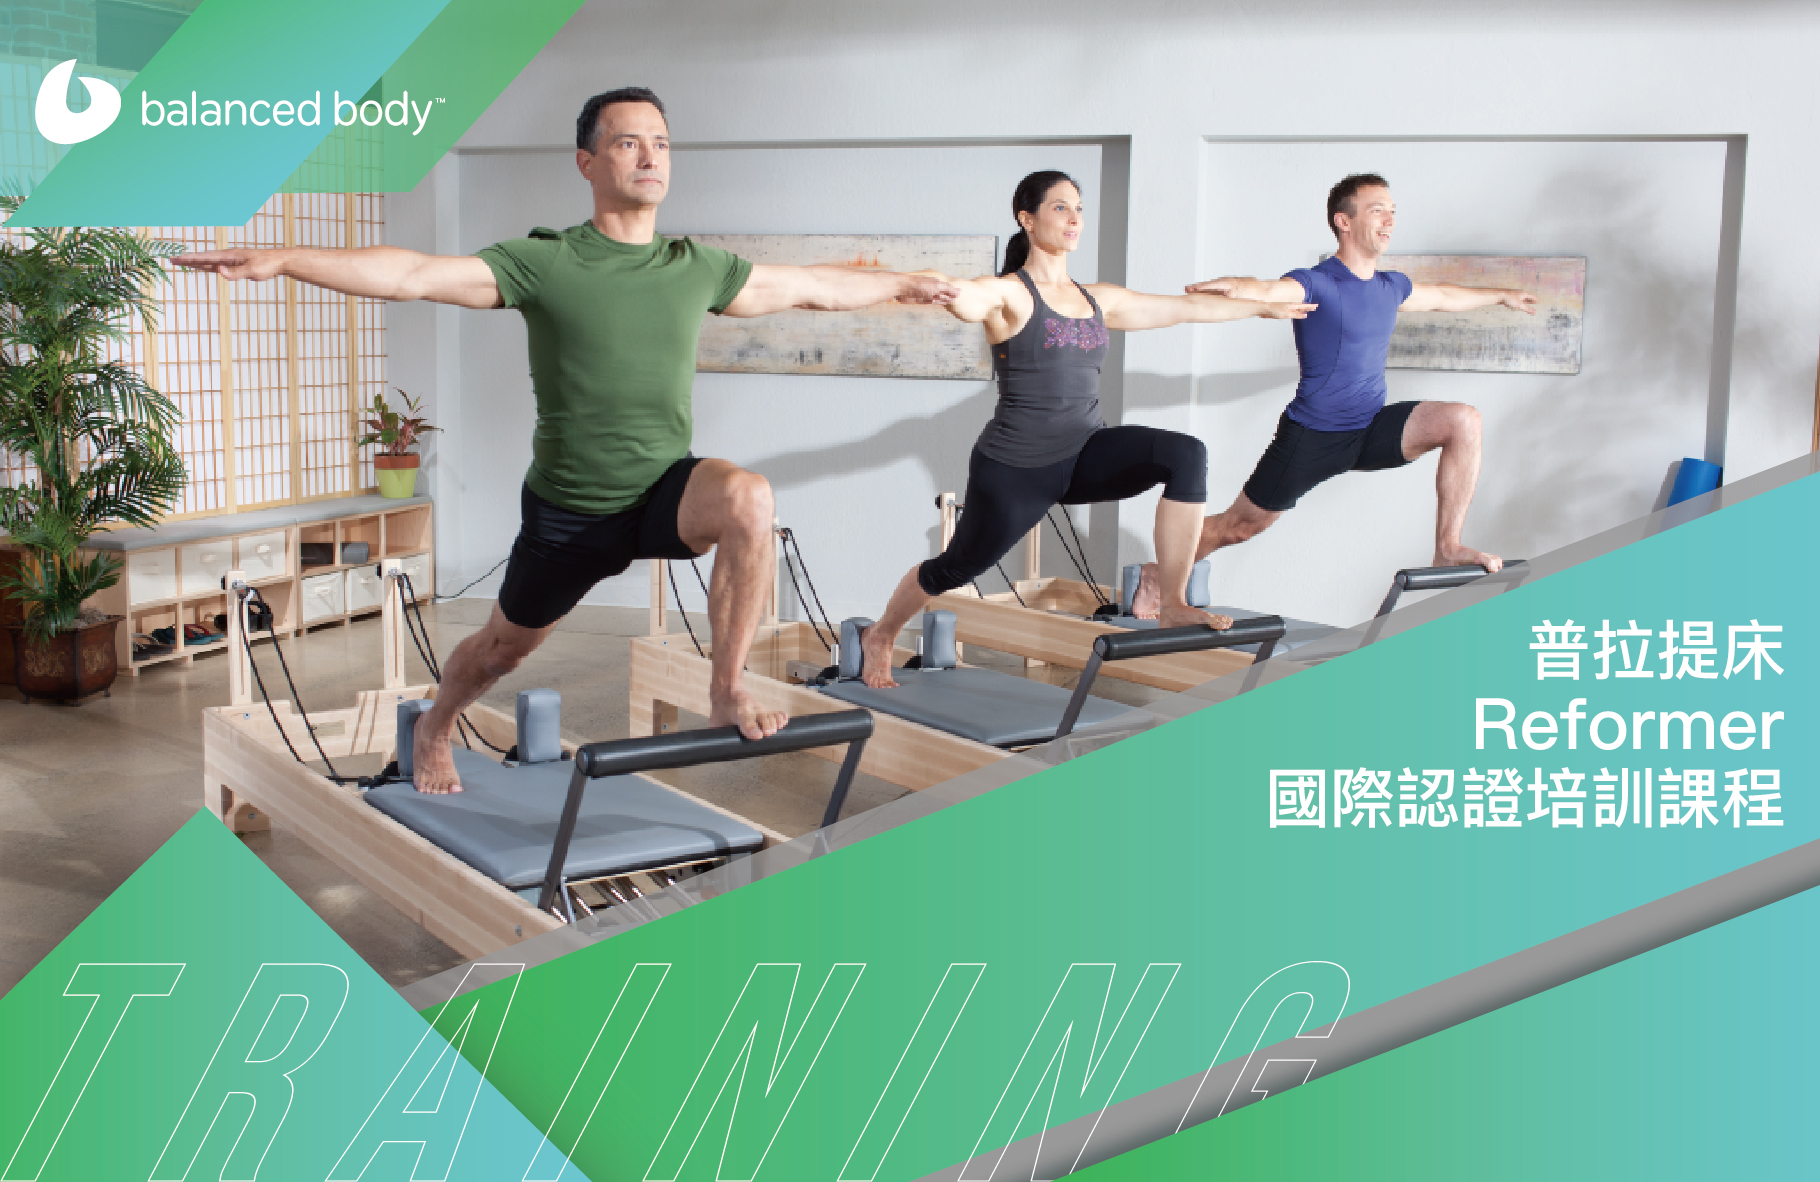 Balanced Body Pilates Arc. Three asian womenの写真素材